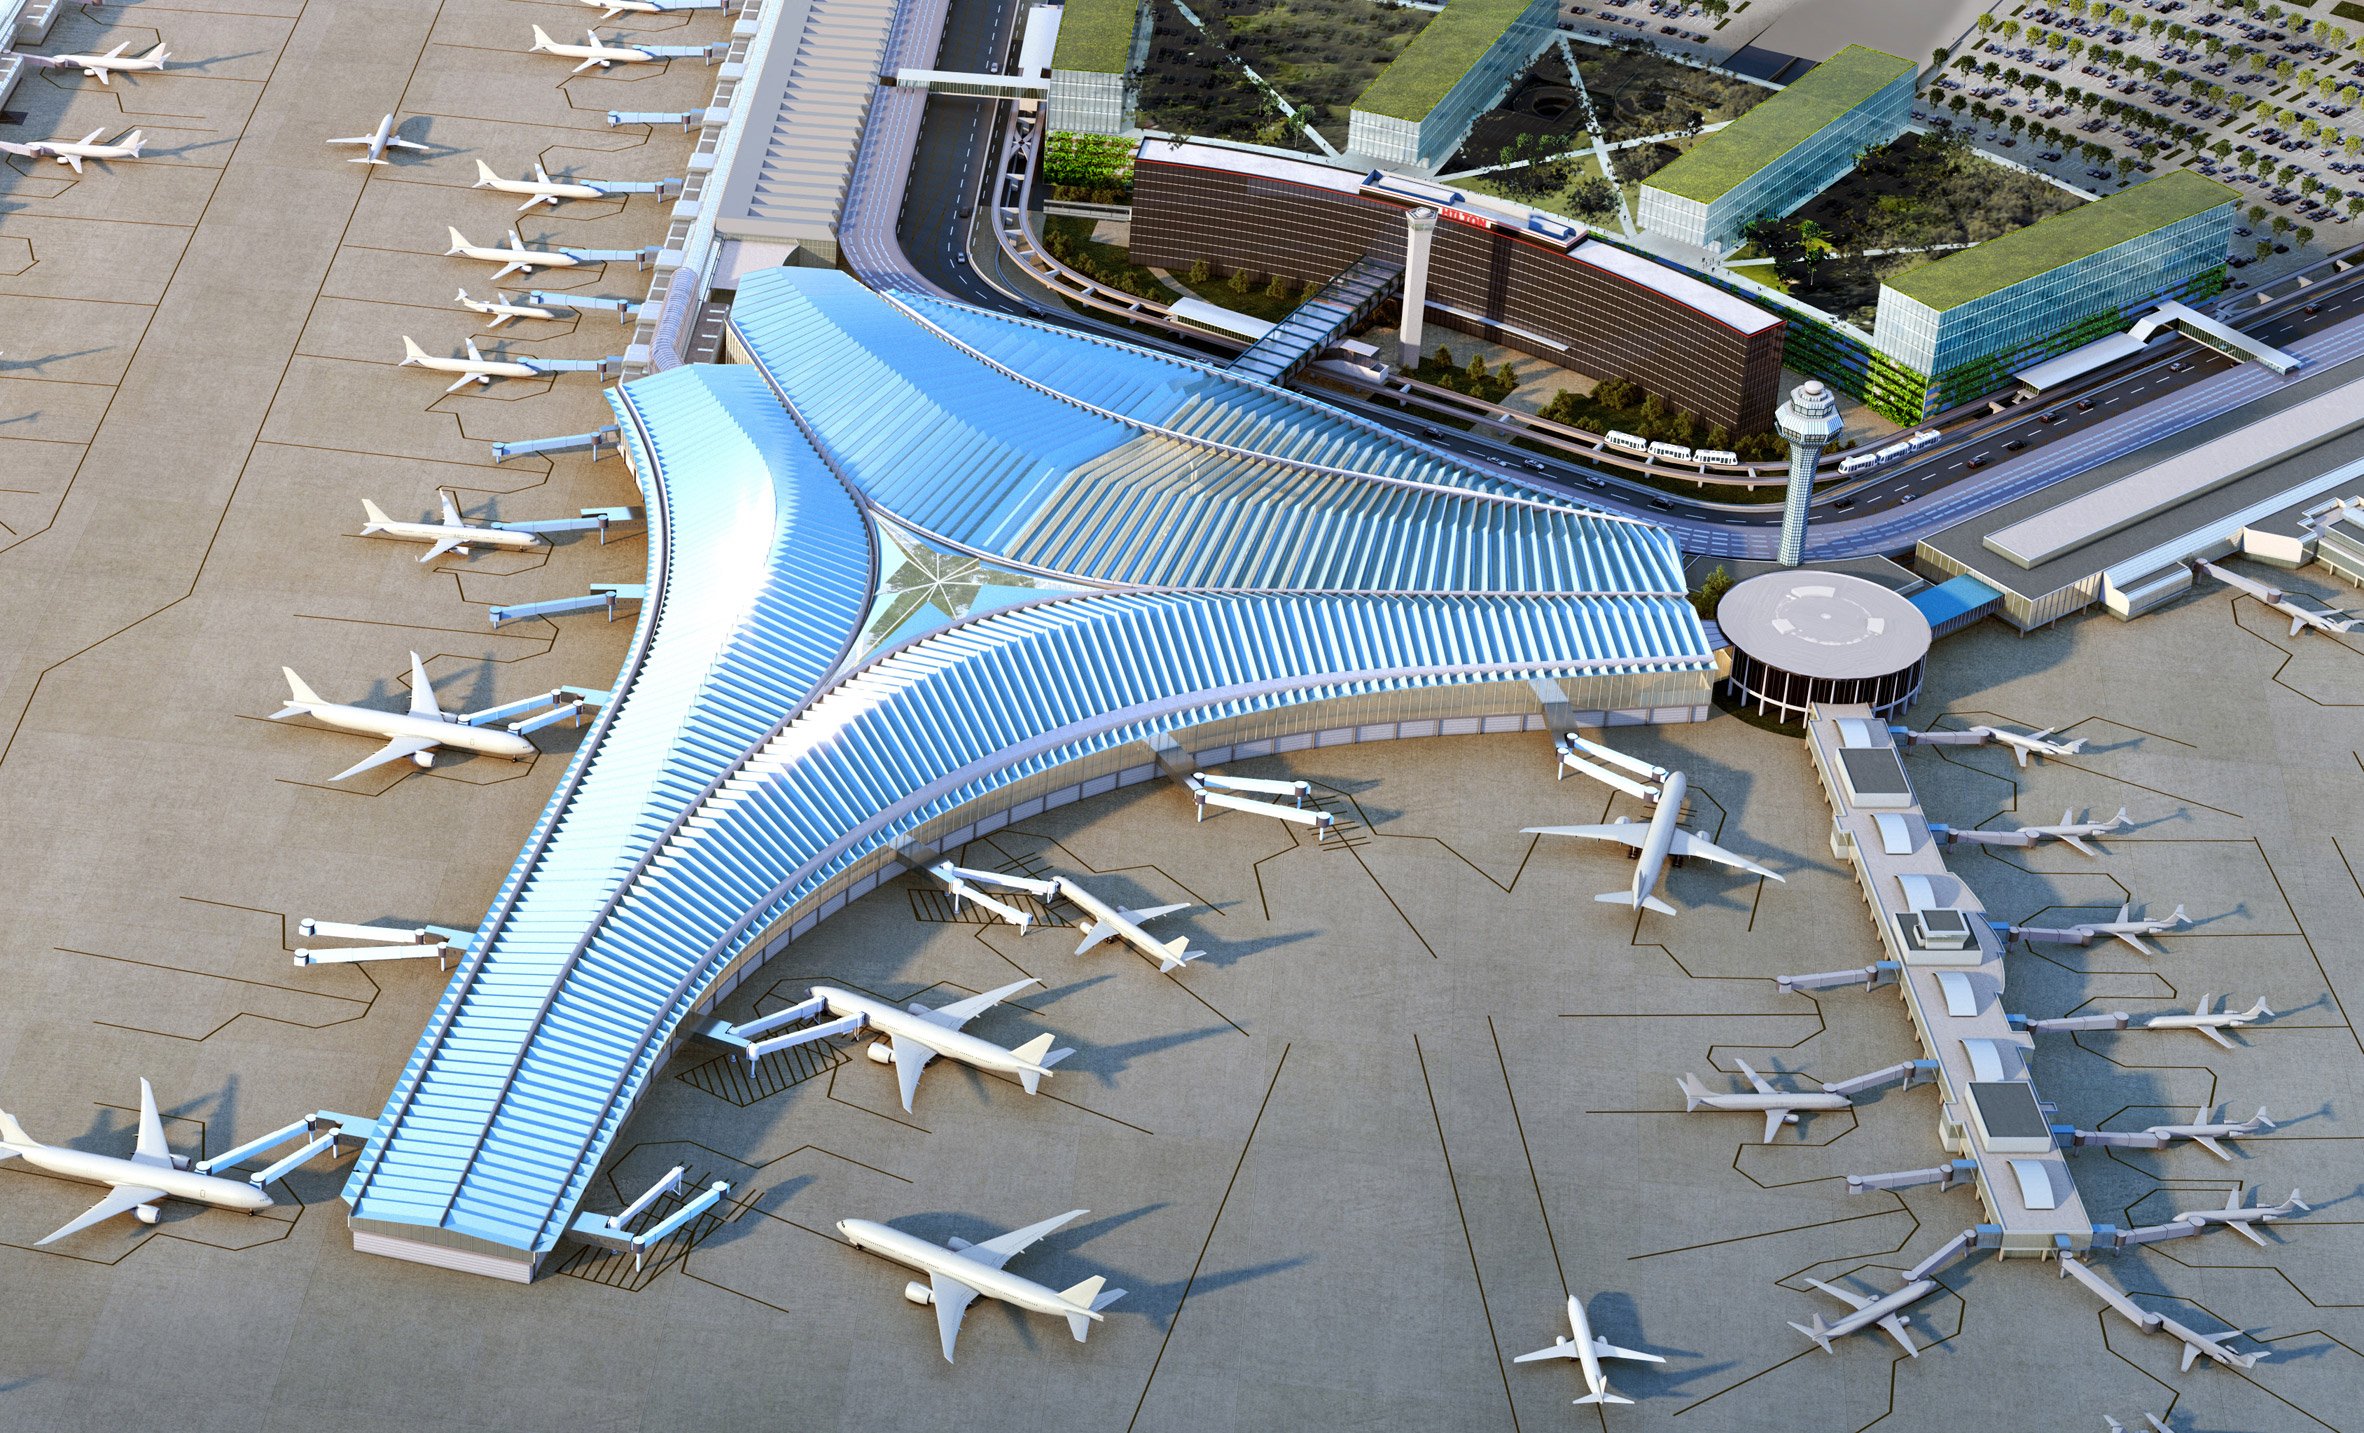 Studio Gang to design Chicago O'Hare airport terminal